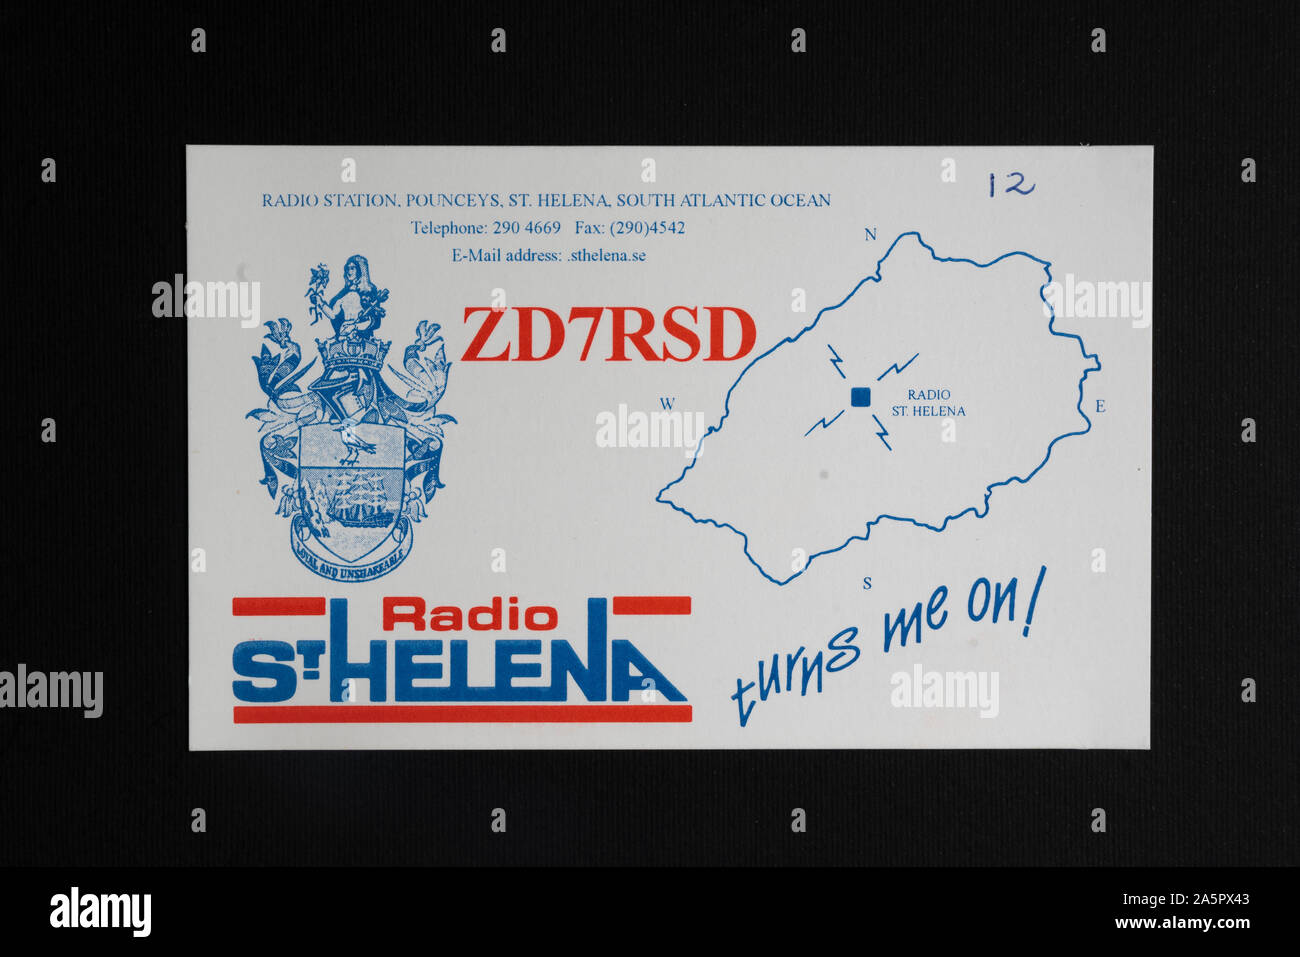 a QSL verification card of Radio St. Helena Stock Photo - Alamy